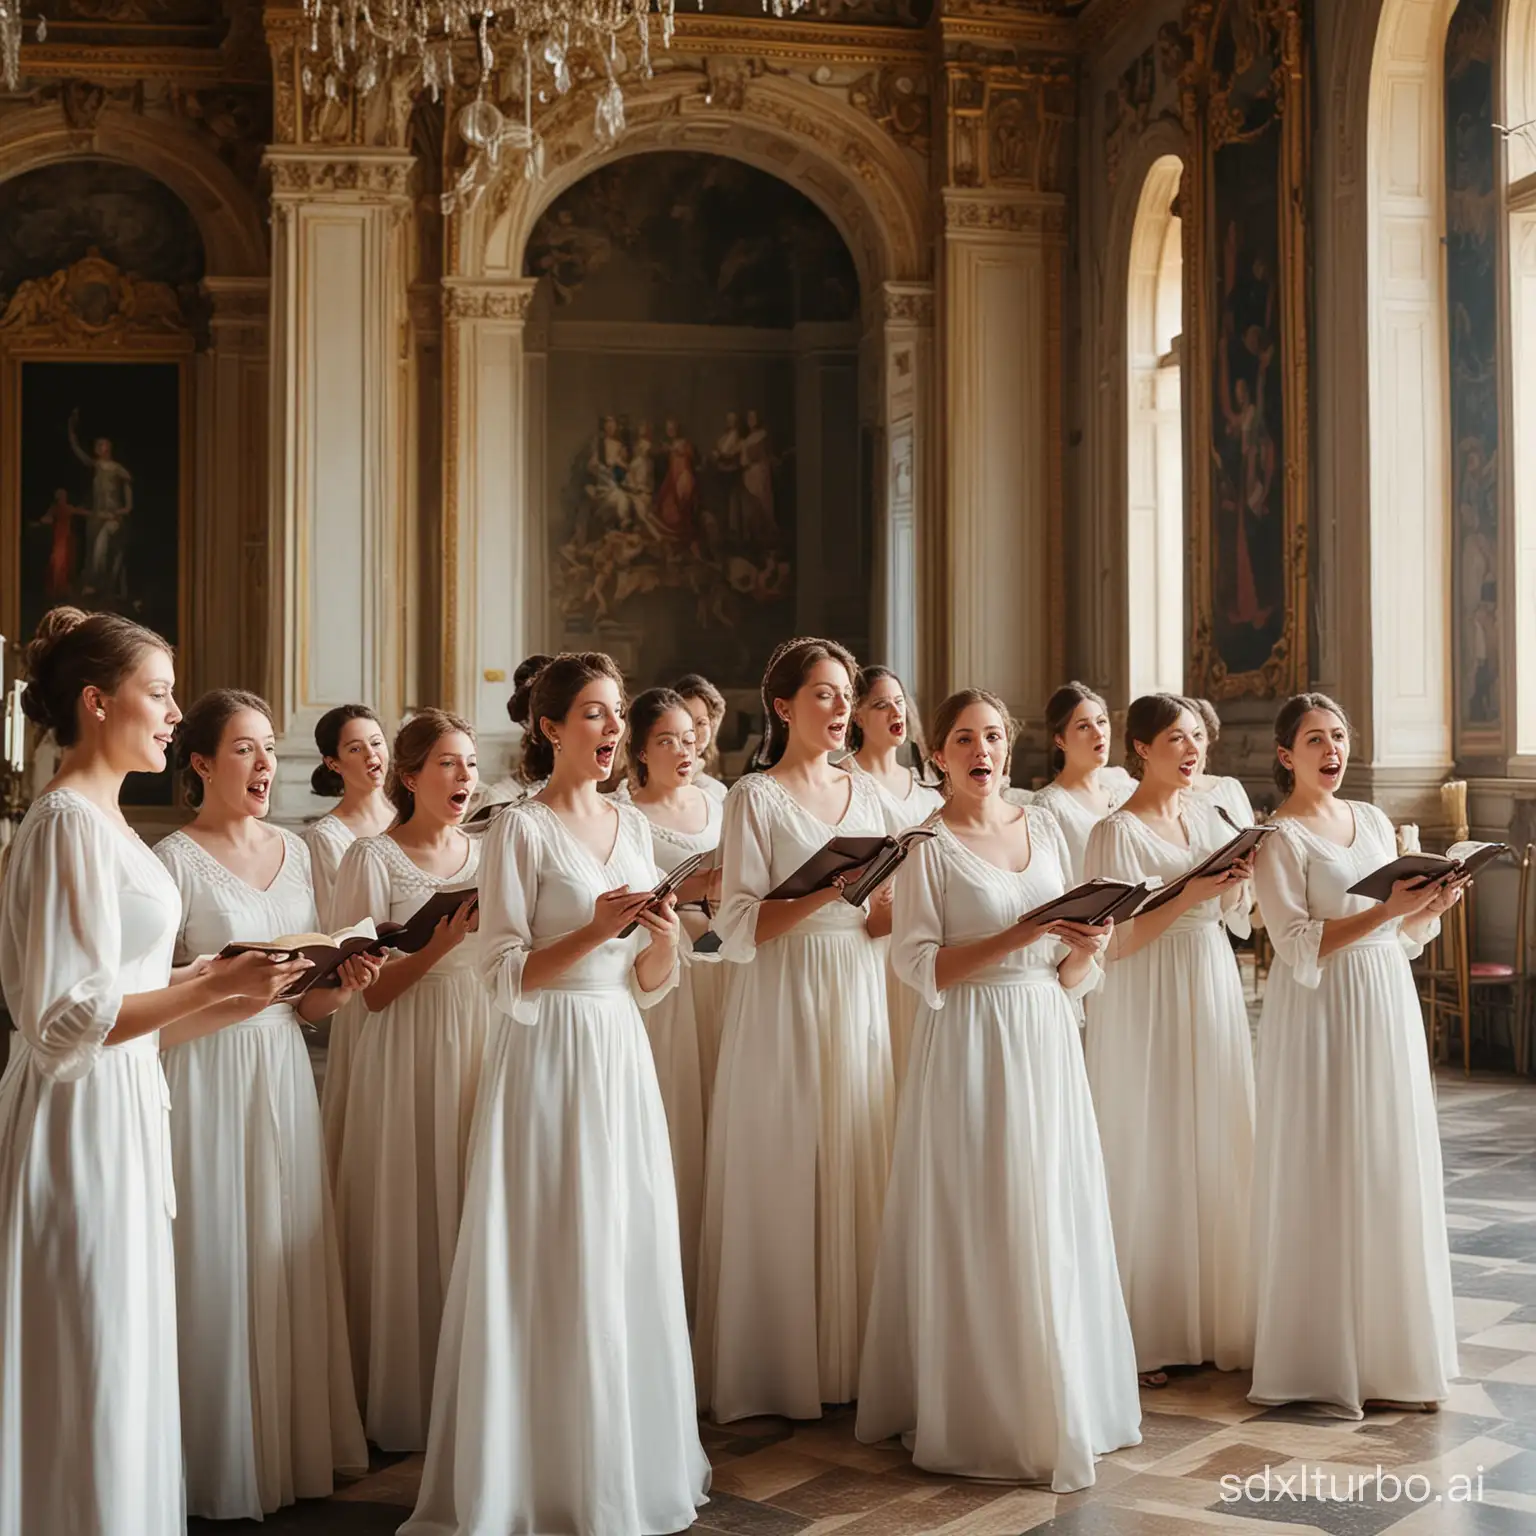 women chorus in a palace, photography, beautiful